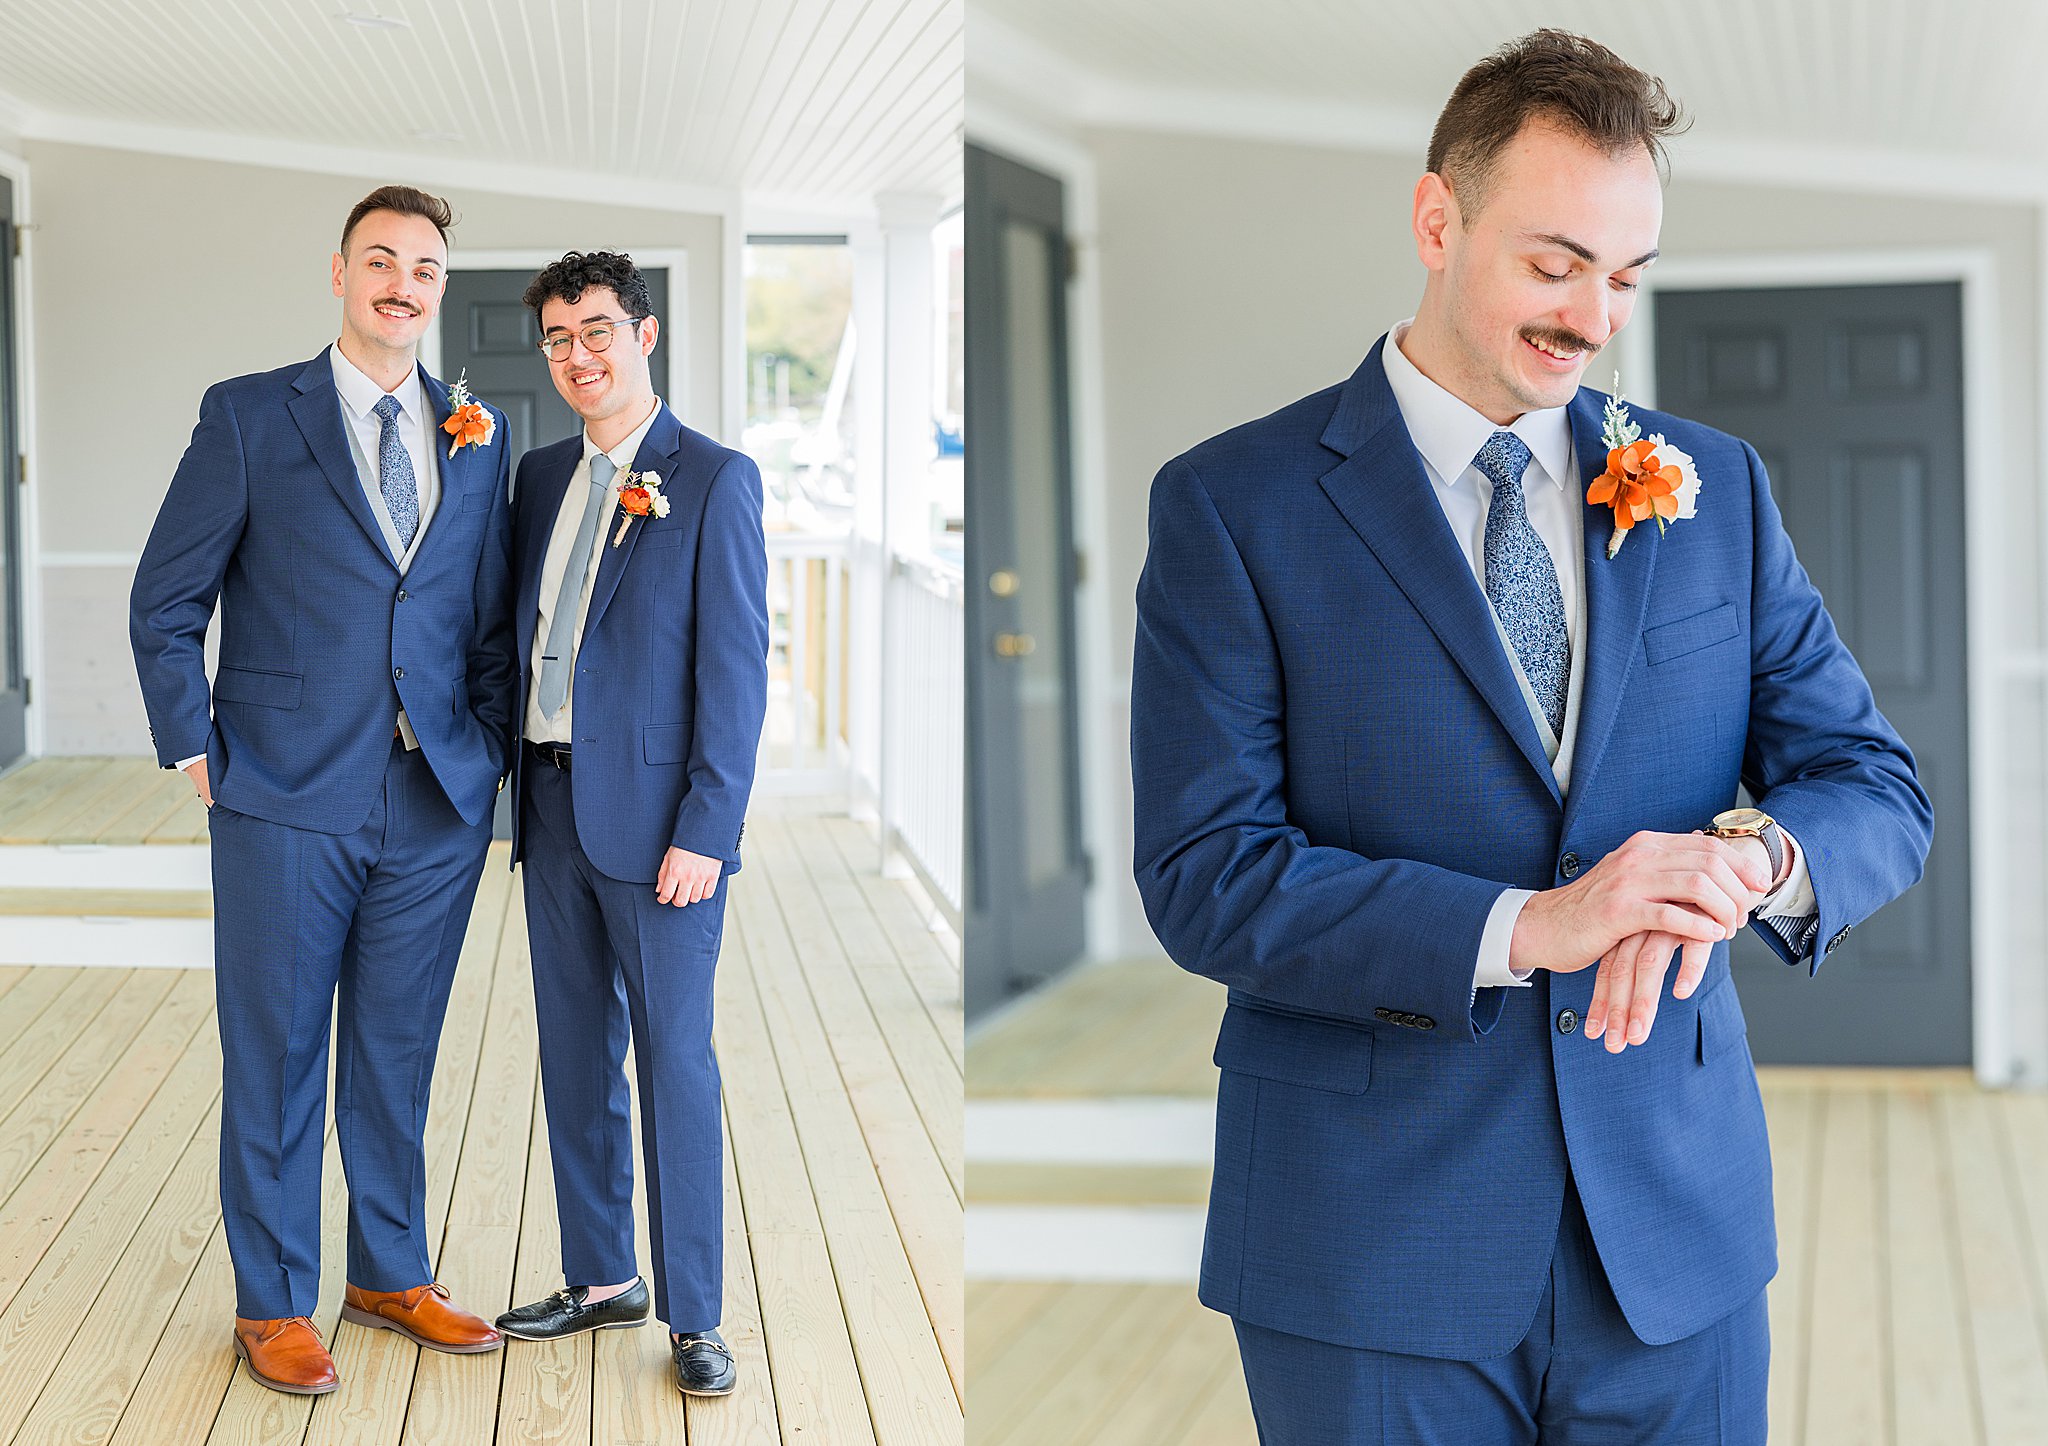 Steven & MacKenzie's Perfect Wedding Day at Deep Creek Landing Marina